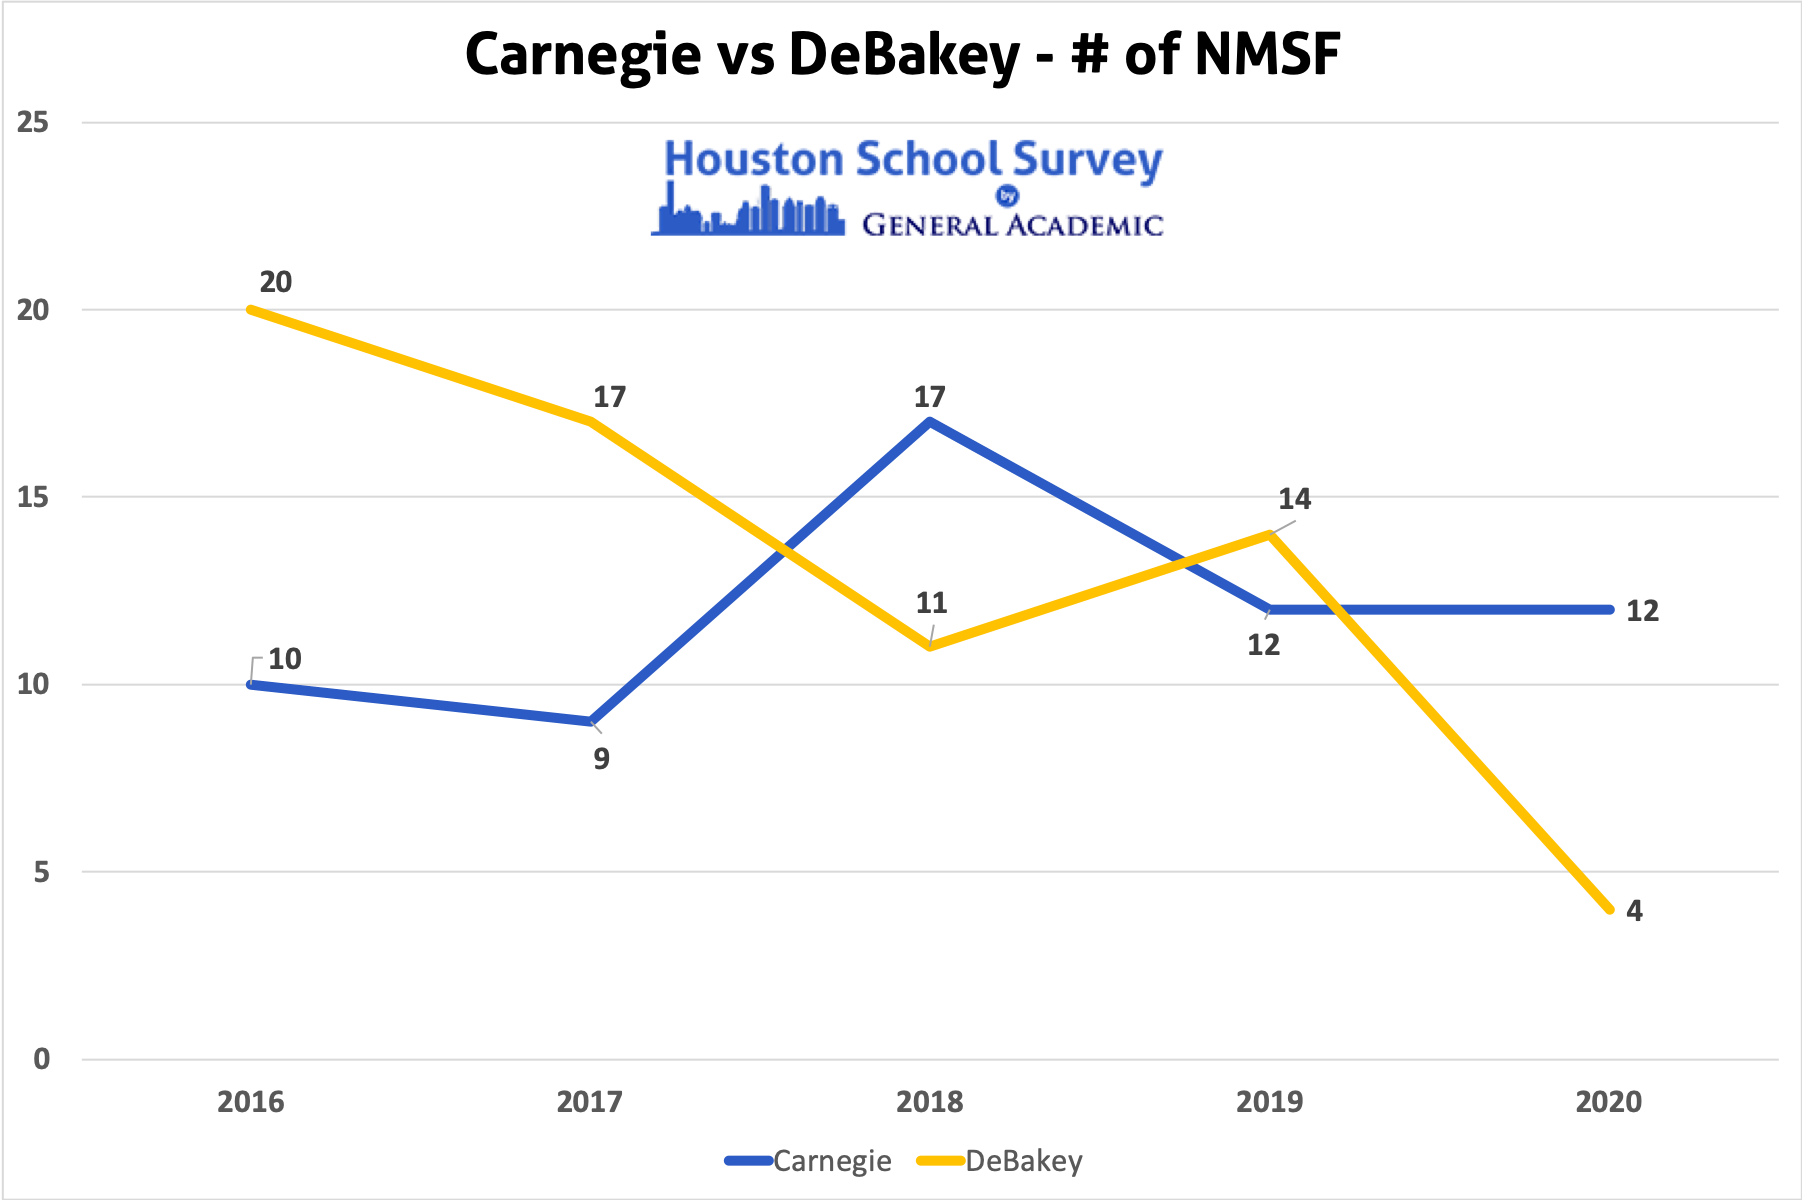 5-Year Line Chart Plotting Carnegie vs DeBakey NMSF